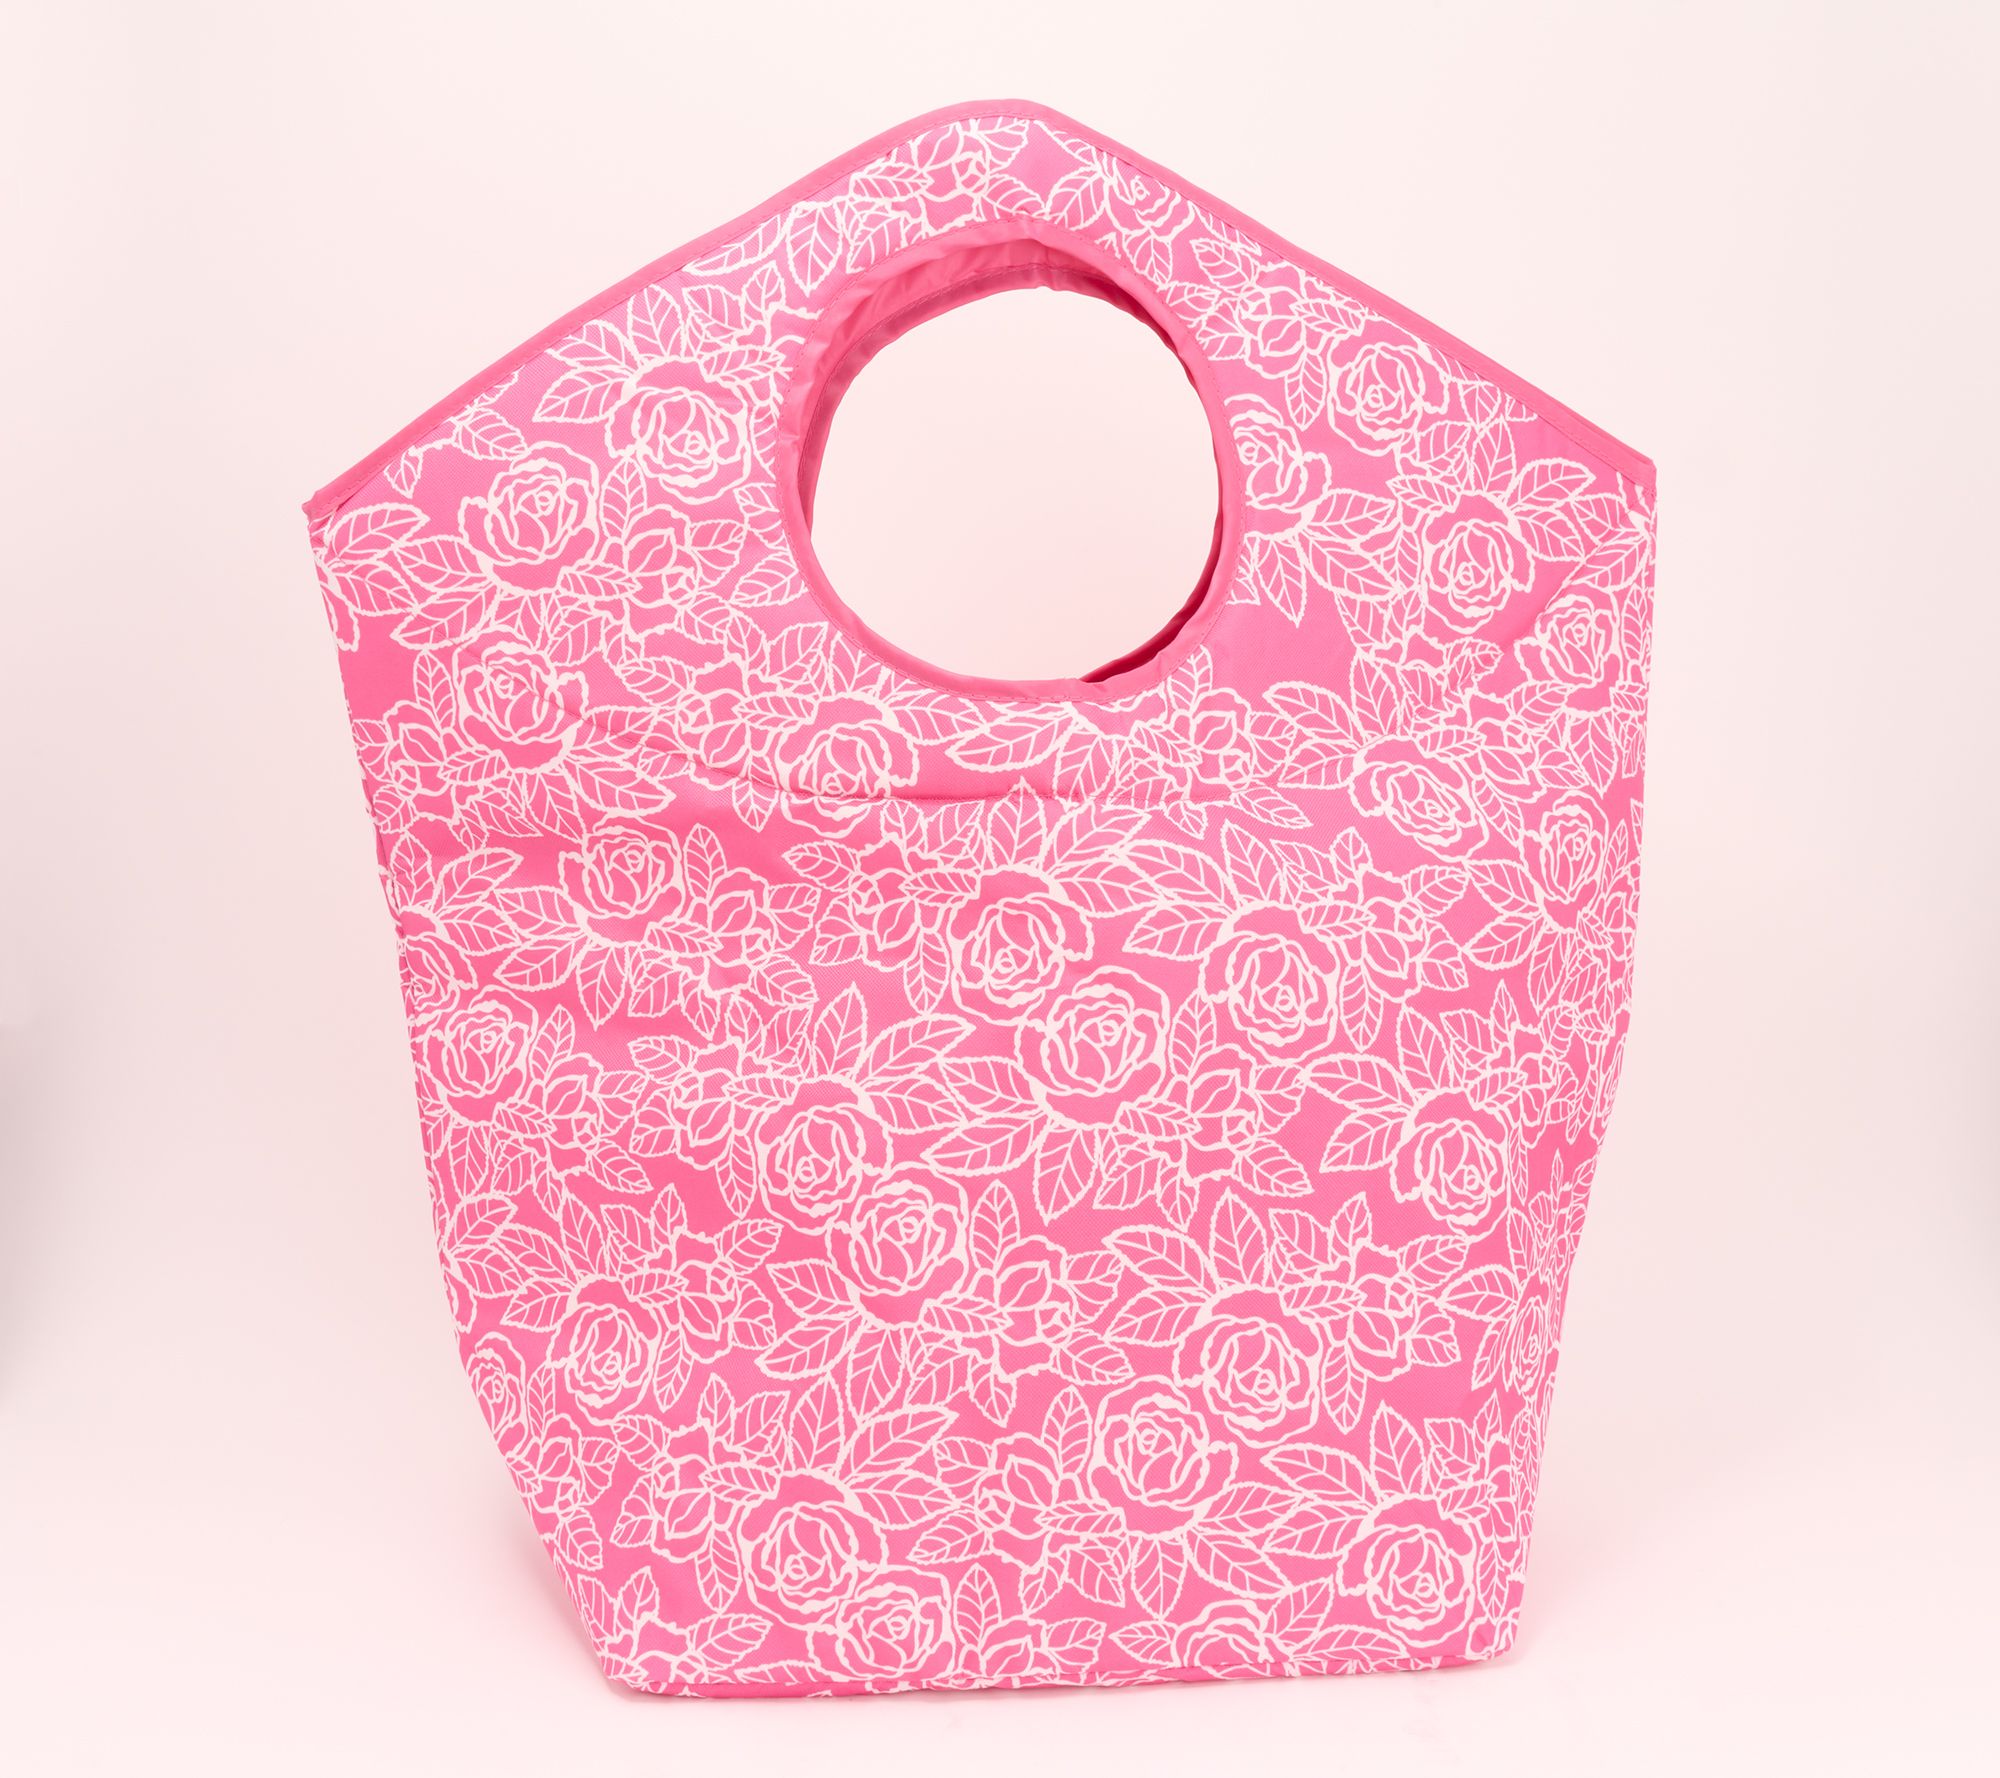 Colorful Polka Dot Fabric Barrel Bag Cosmetic Bag, Large Capacity